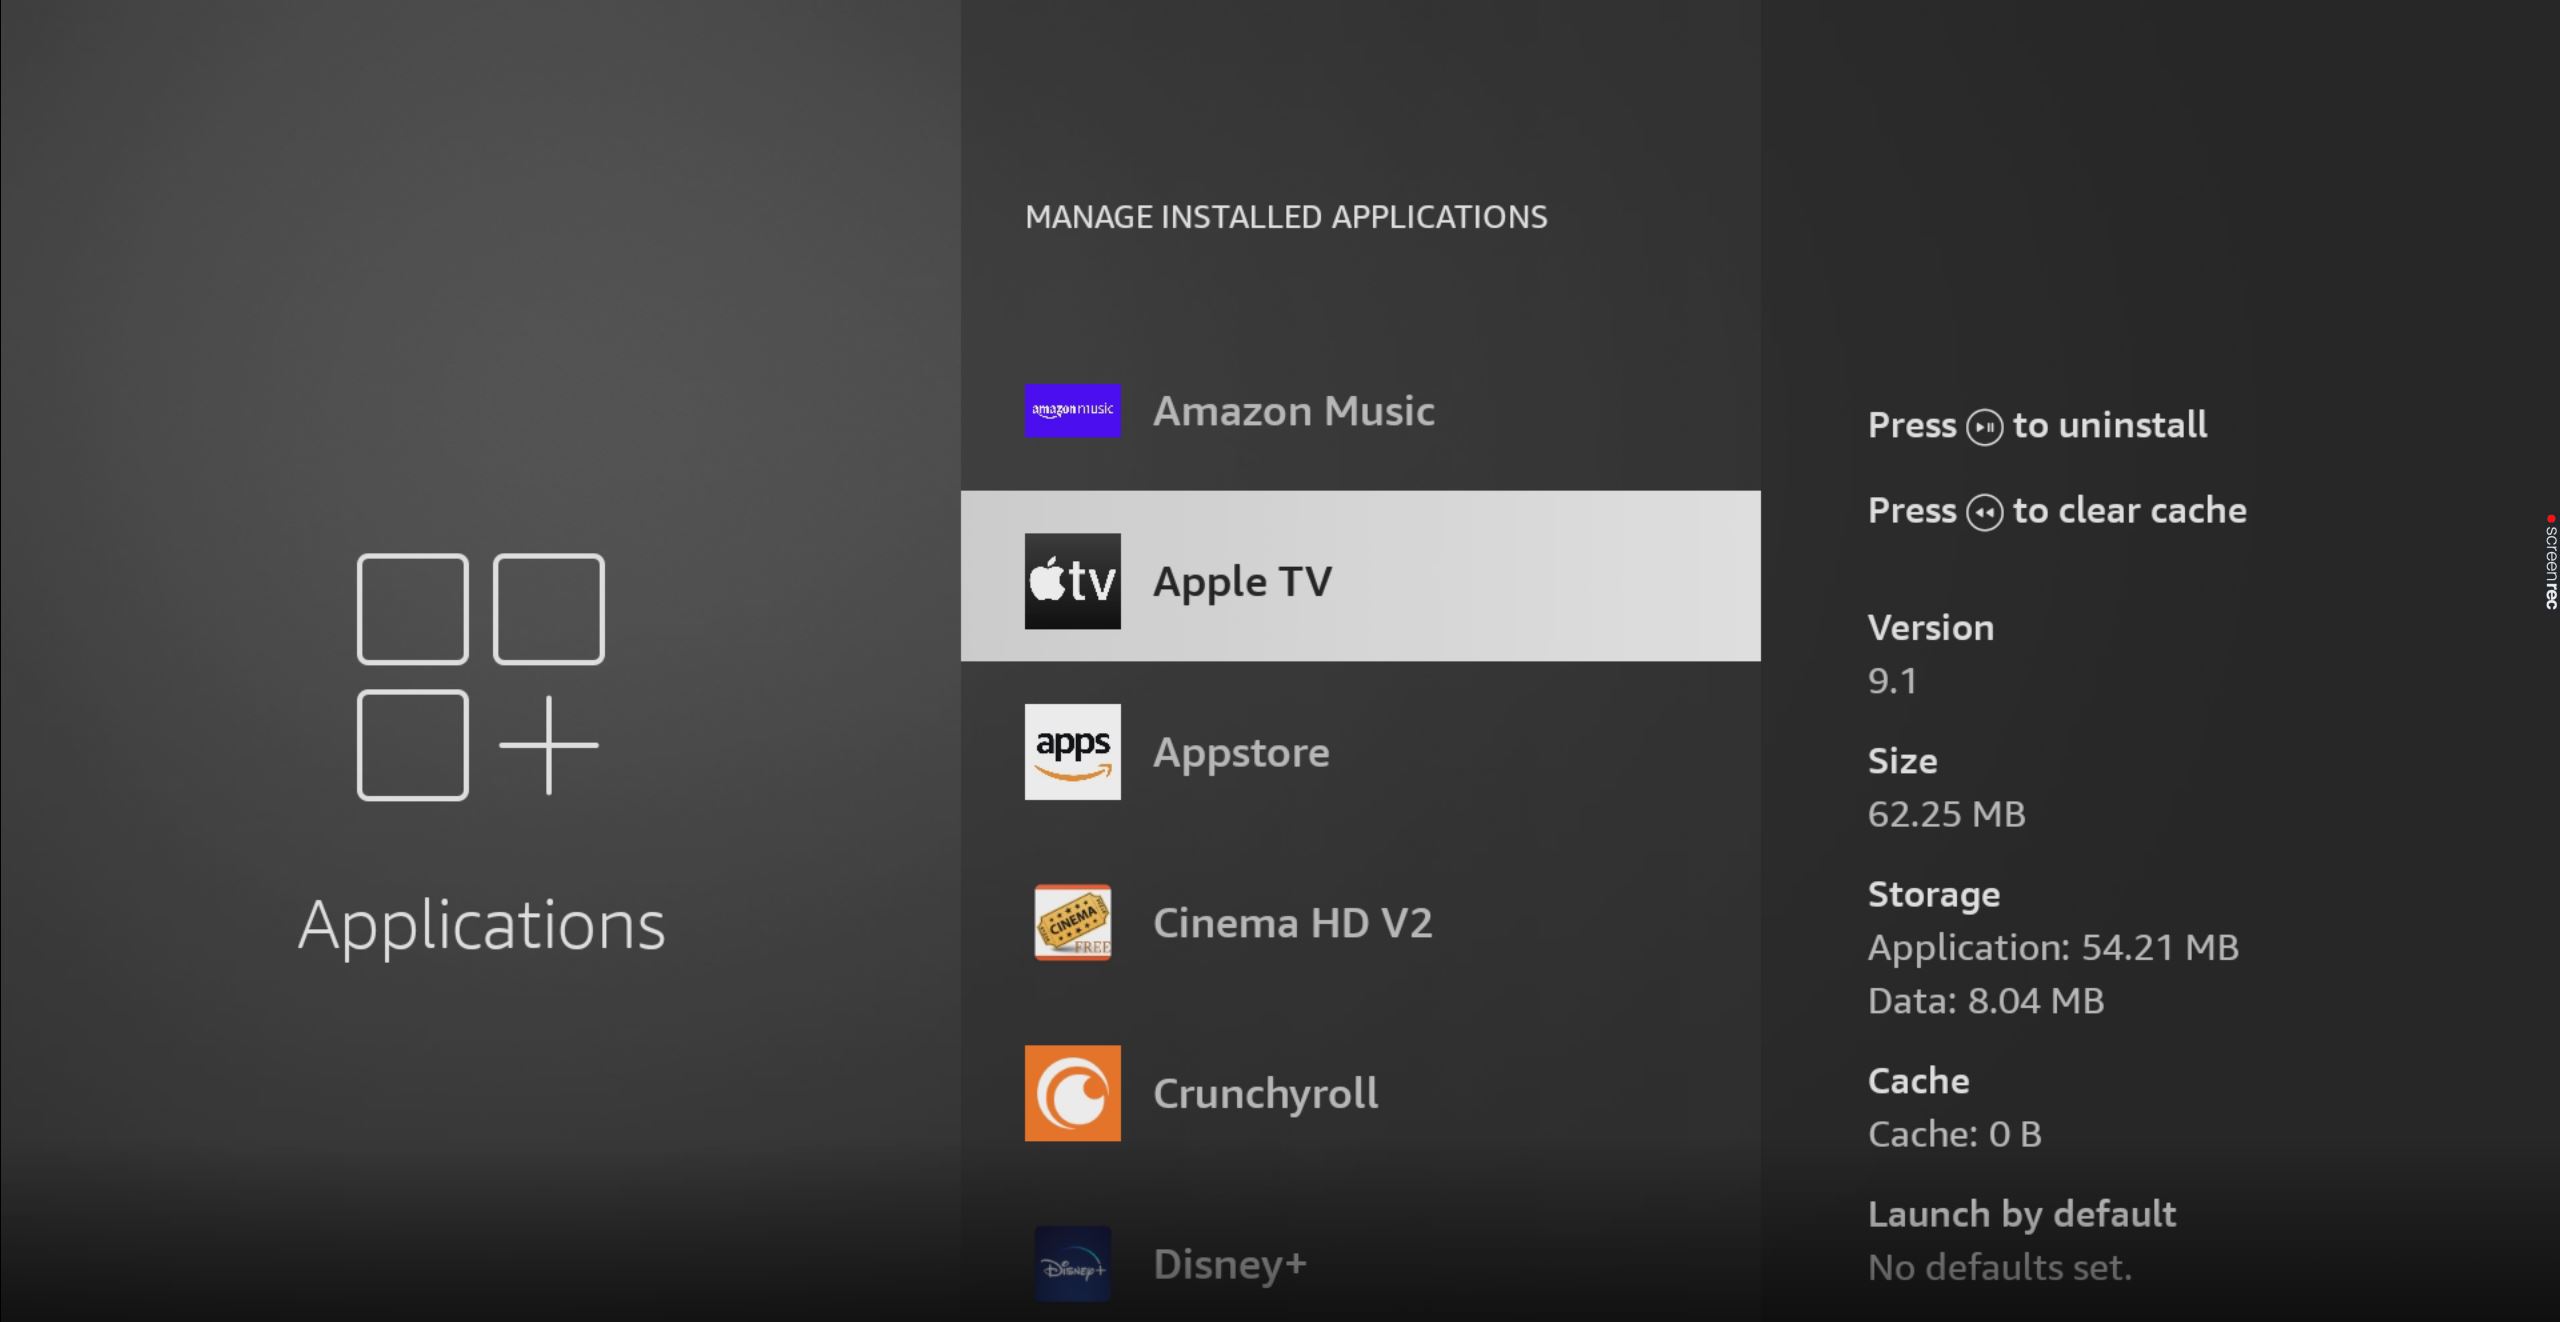 How to update Apple TV on Amazon Firestick